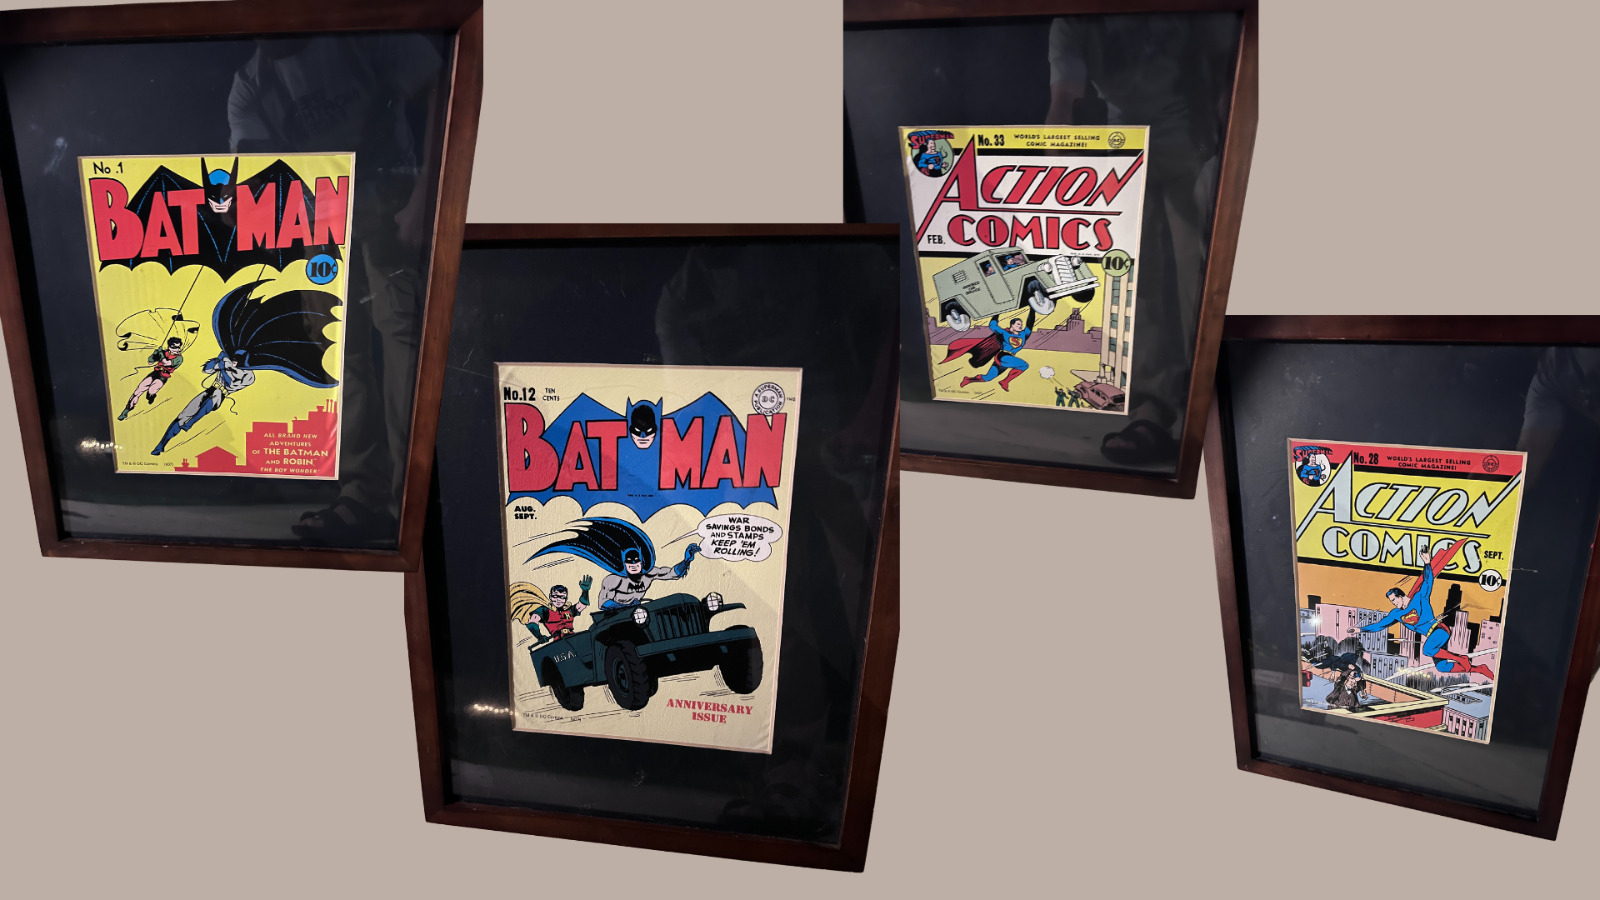 Vintage Style Comic Book Art Prints Framed - Batman & Action Comics - Wall Decor